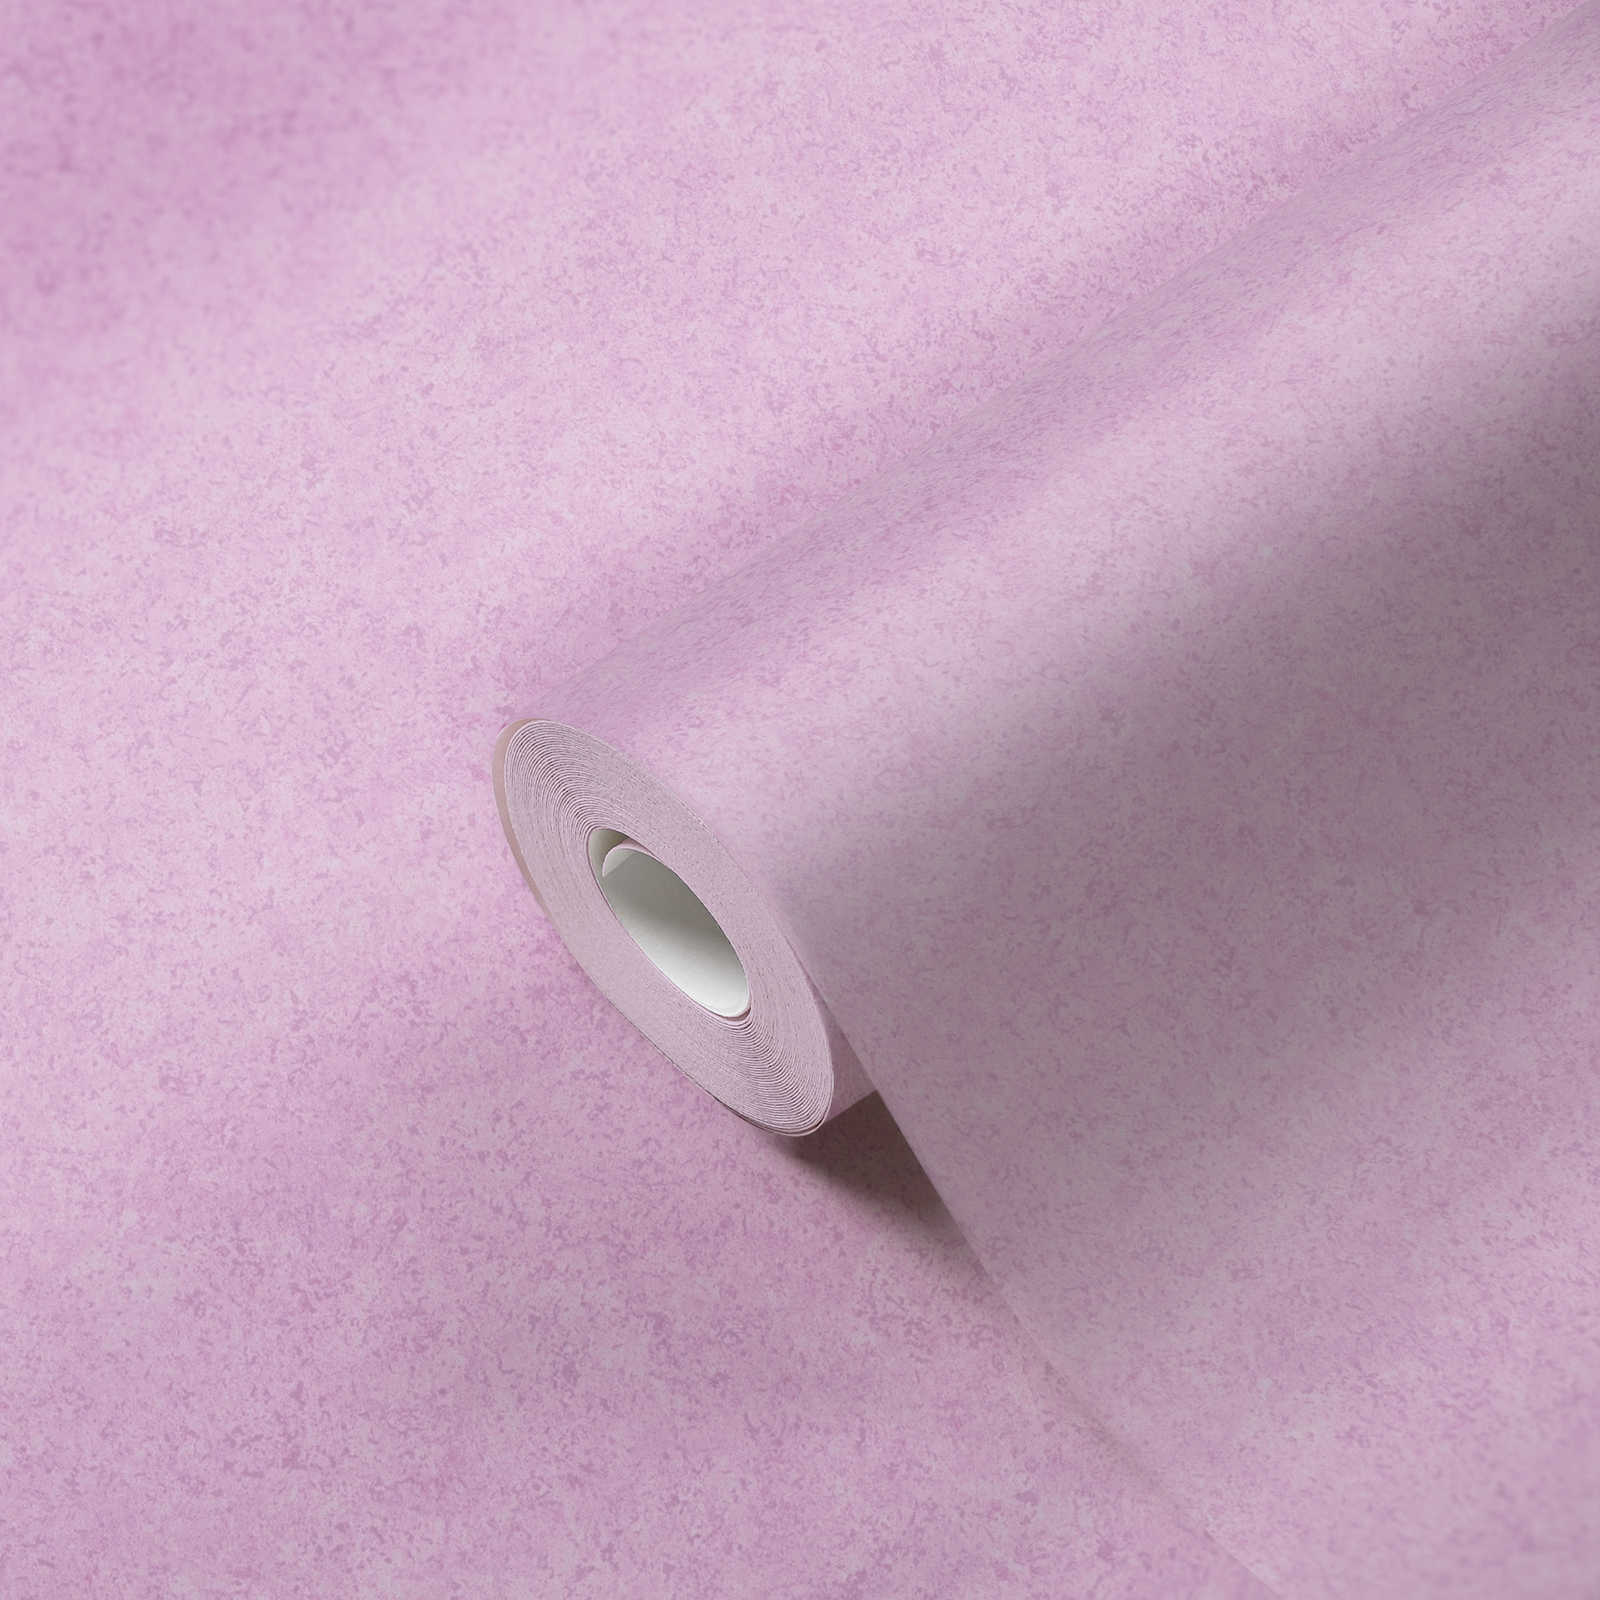             Papel pintado no tejido con aspecto de escayola rosa con dibujo mate - rosa
        